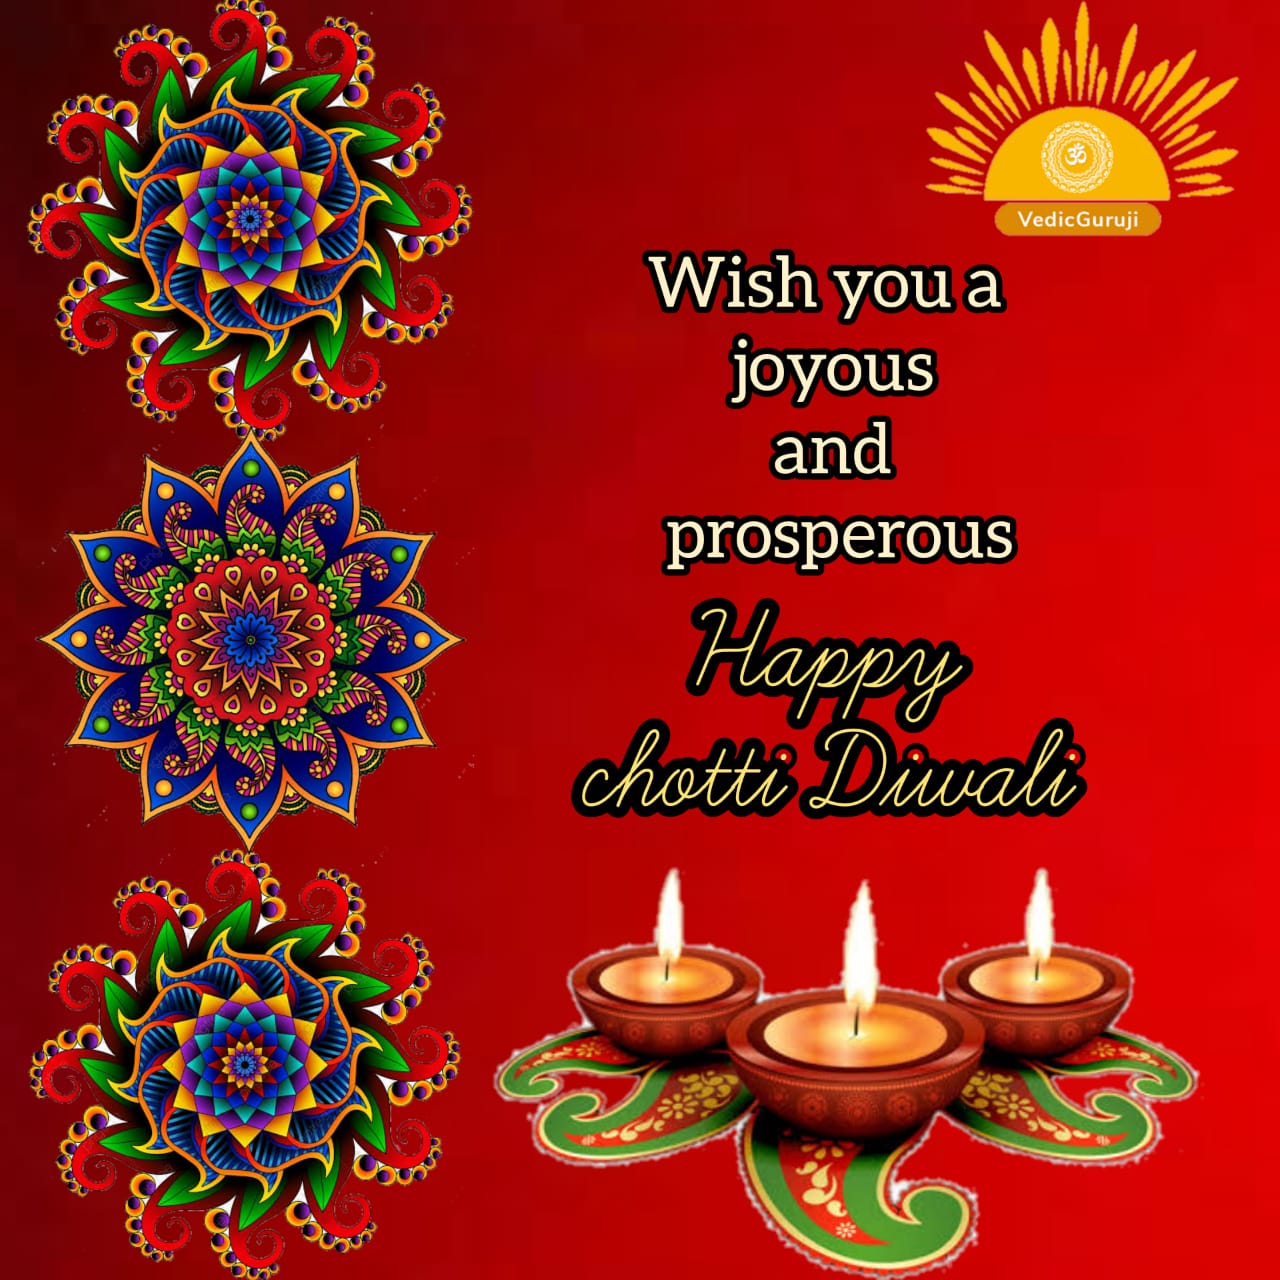 Choti Diwali and its significance